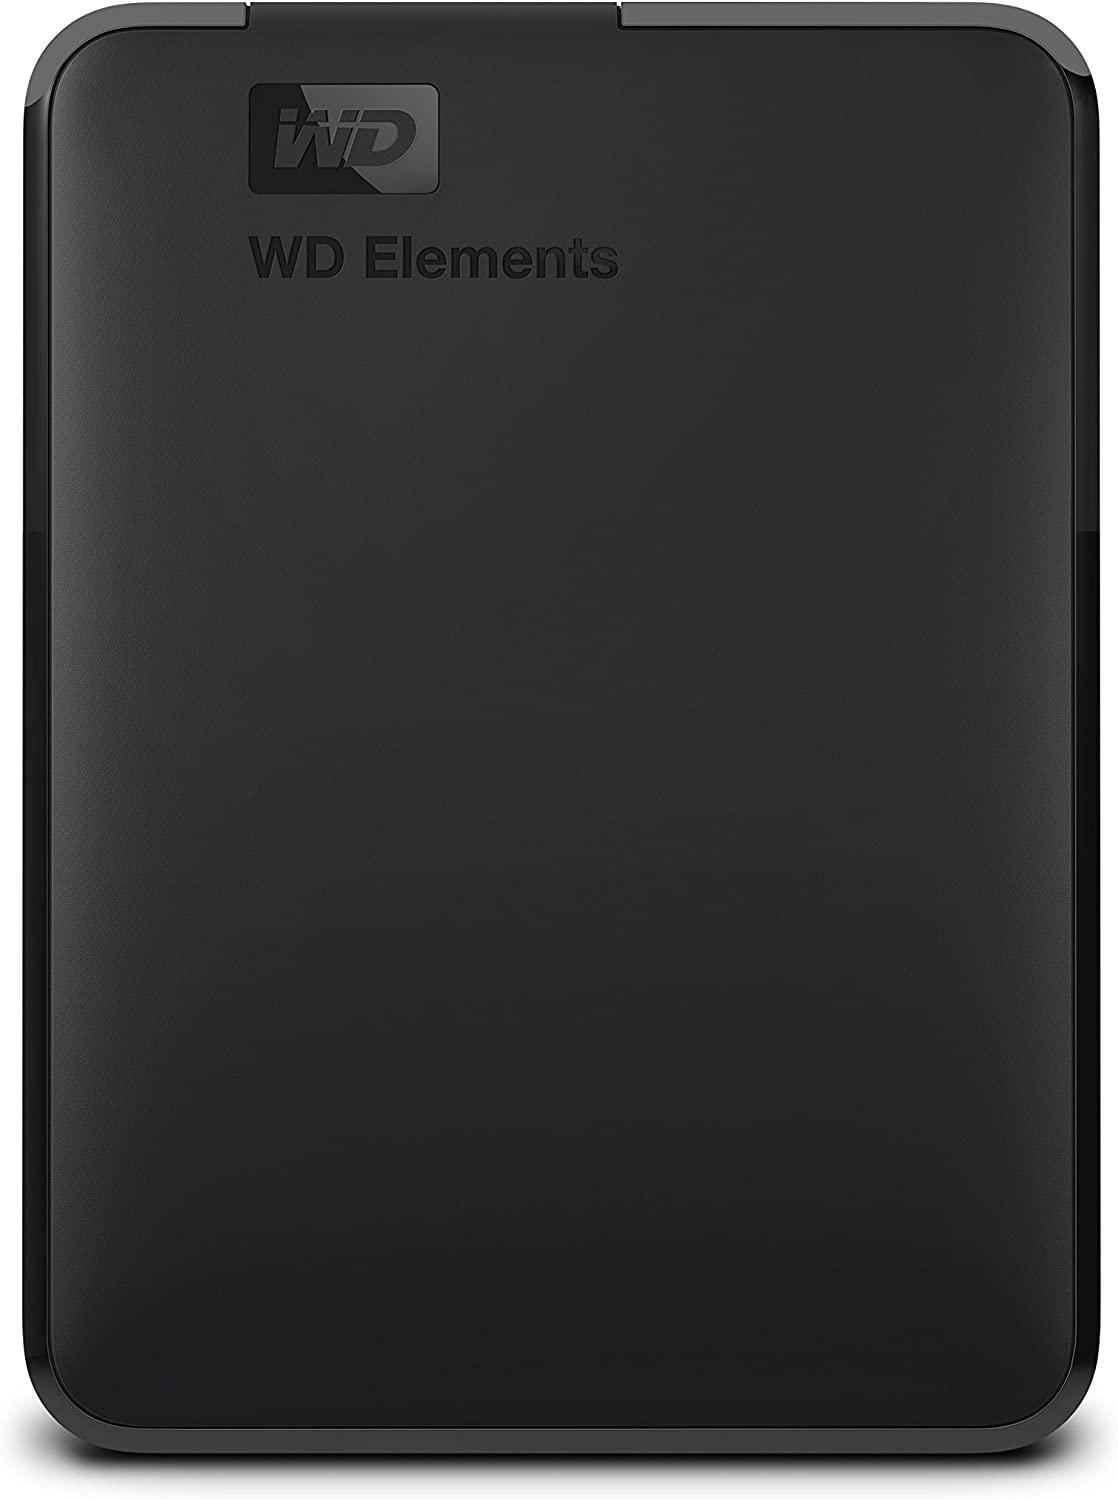 WD Elements 4 TB